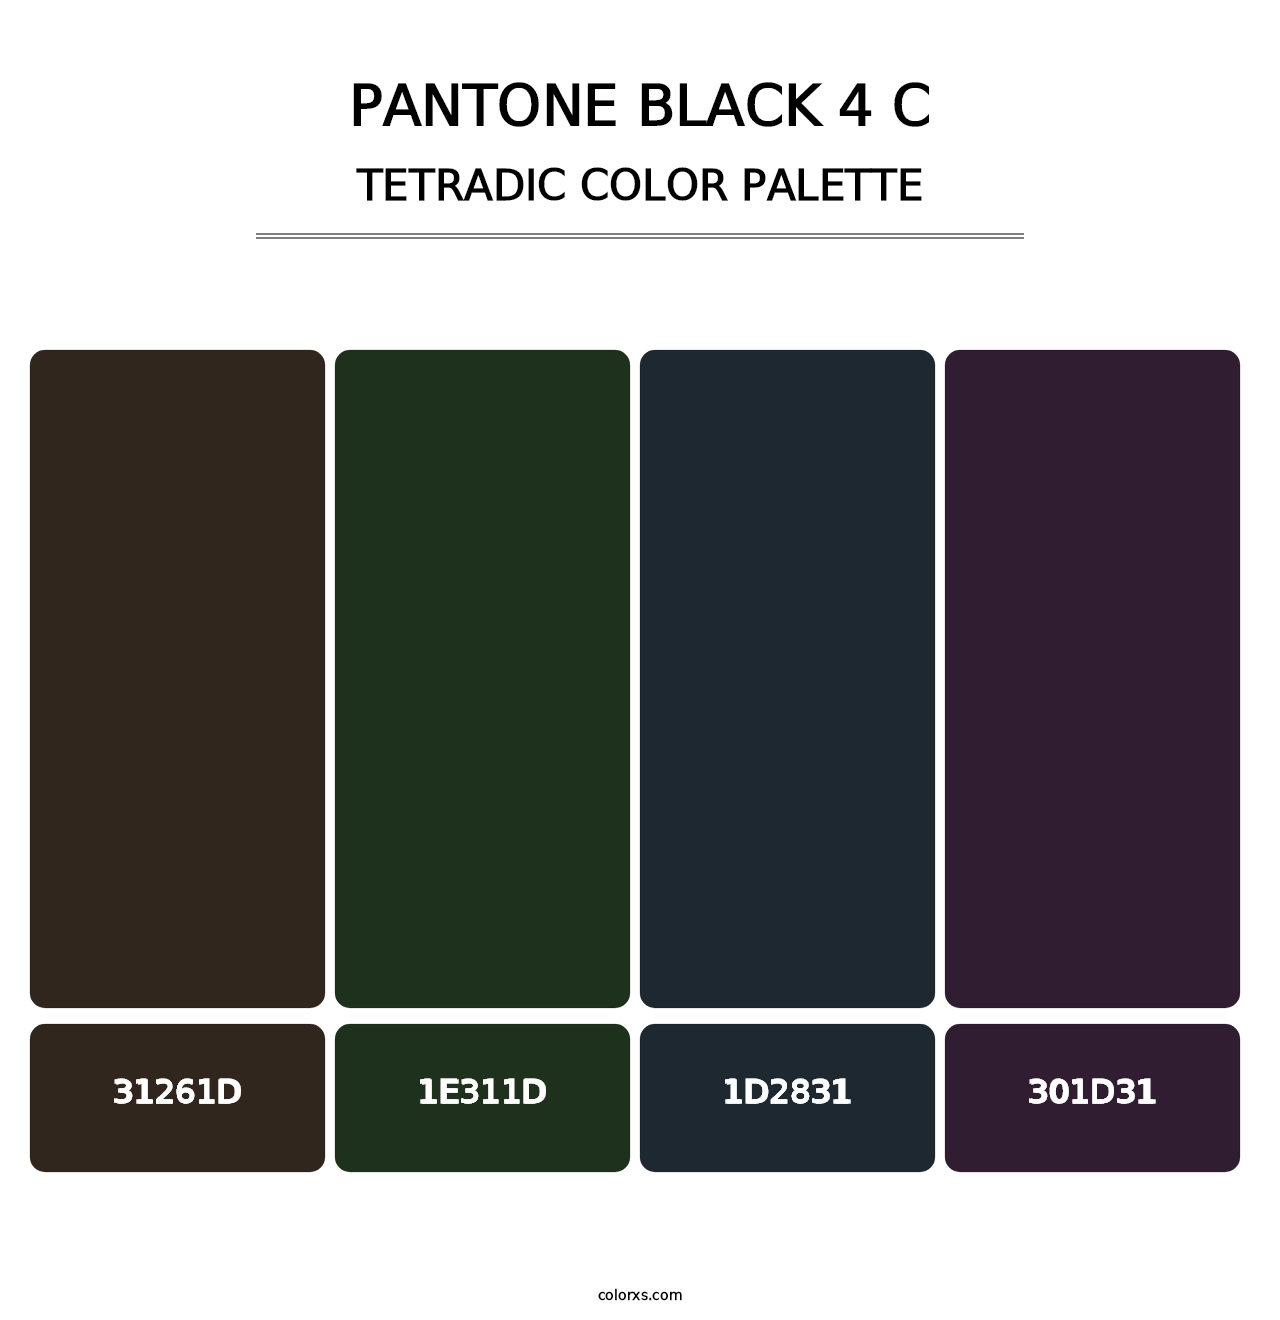 PANTONE Black 4 C - Tetradic Color Palette